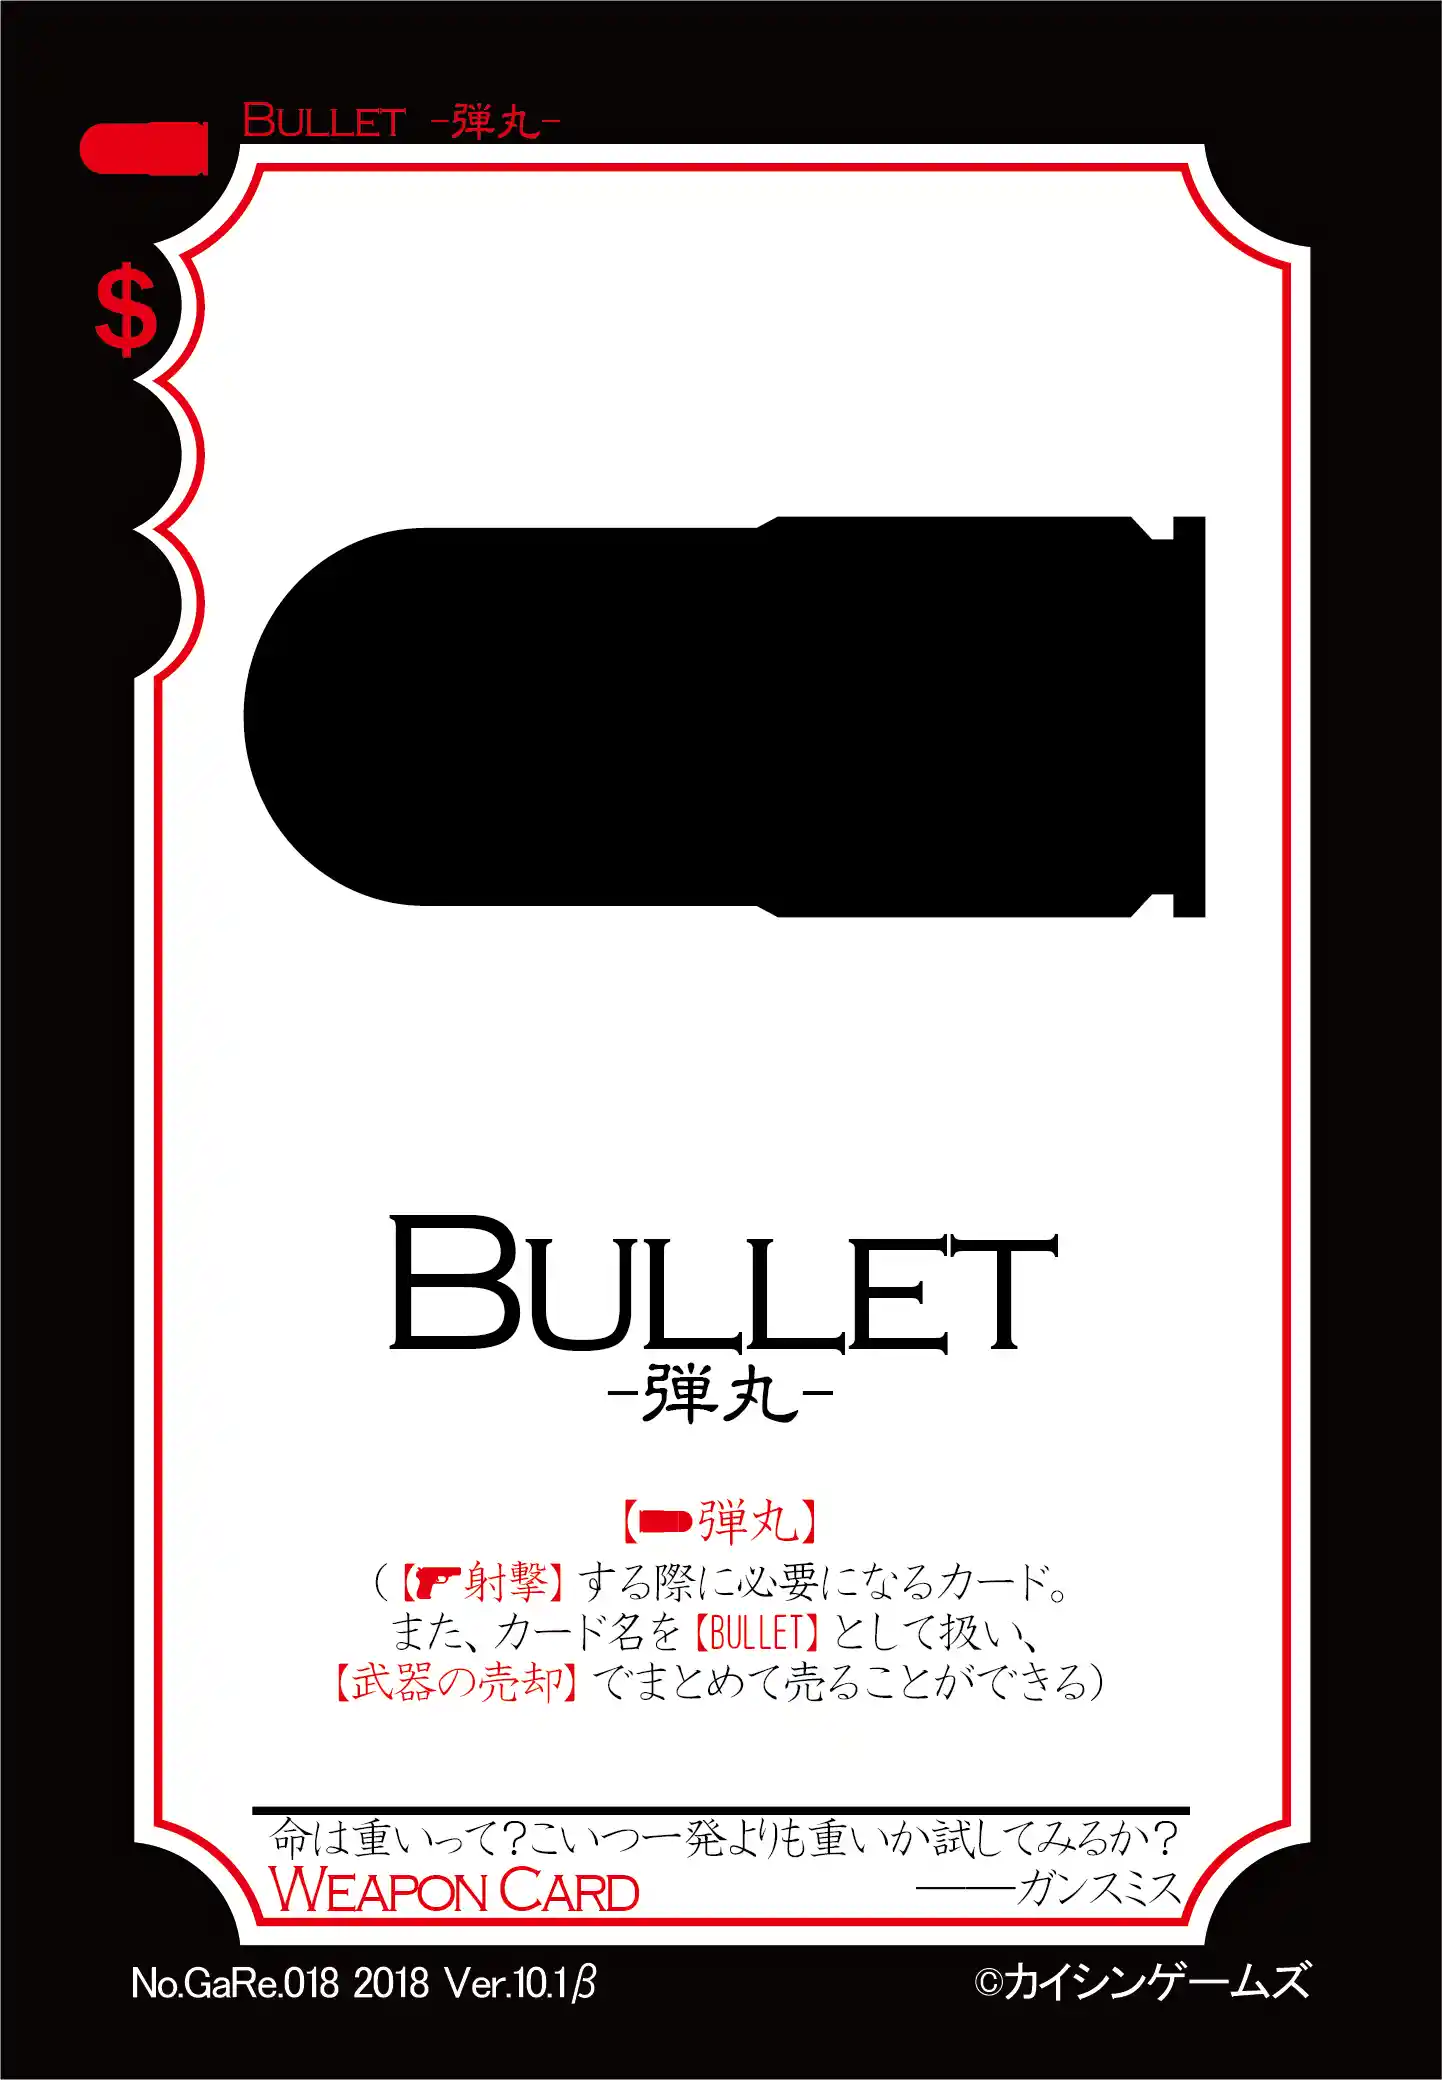 BULLET